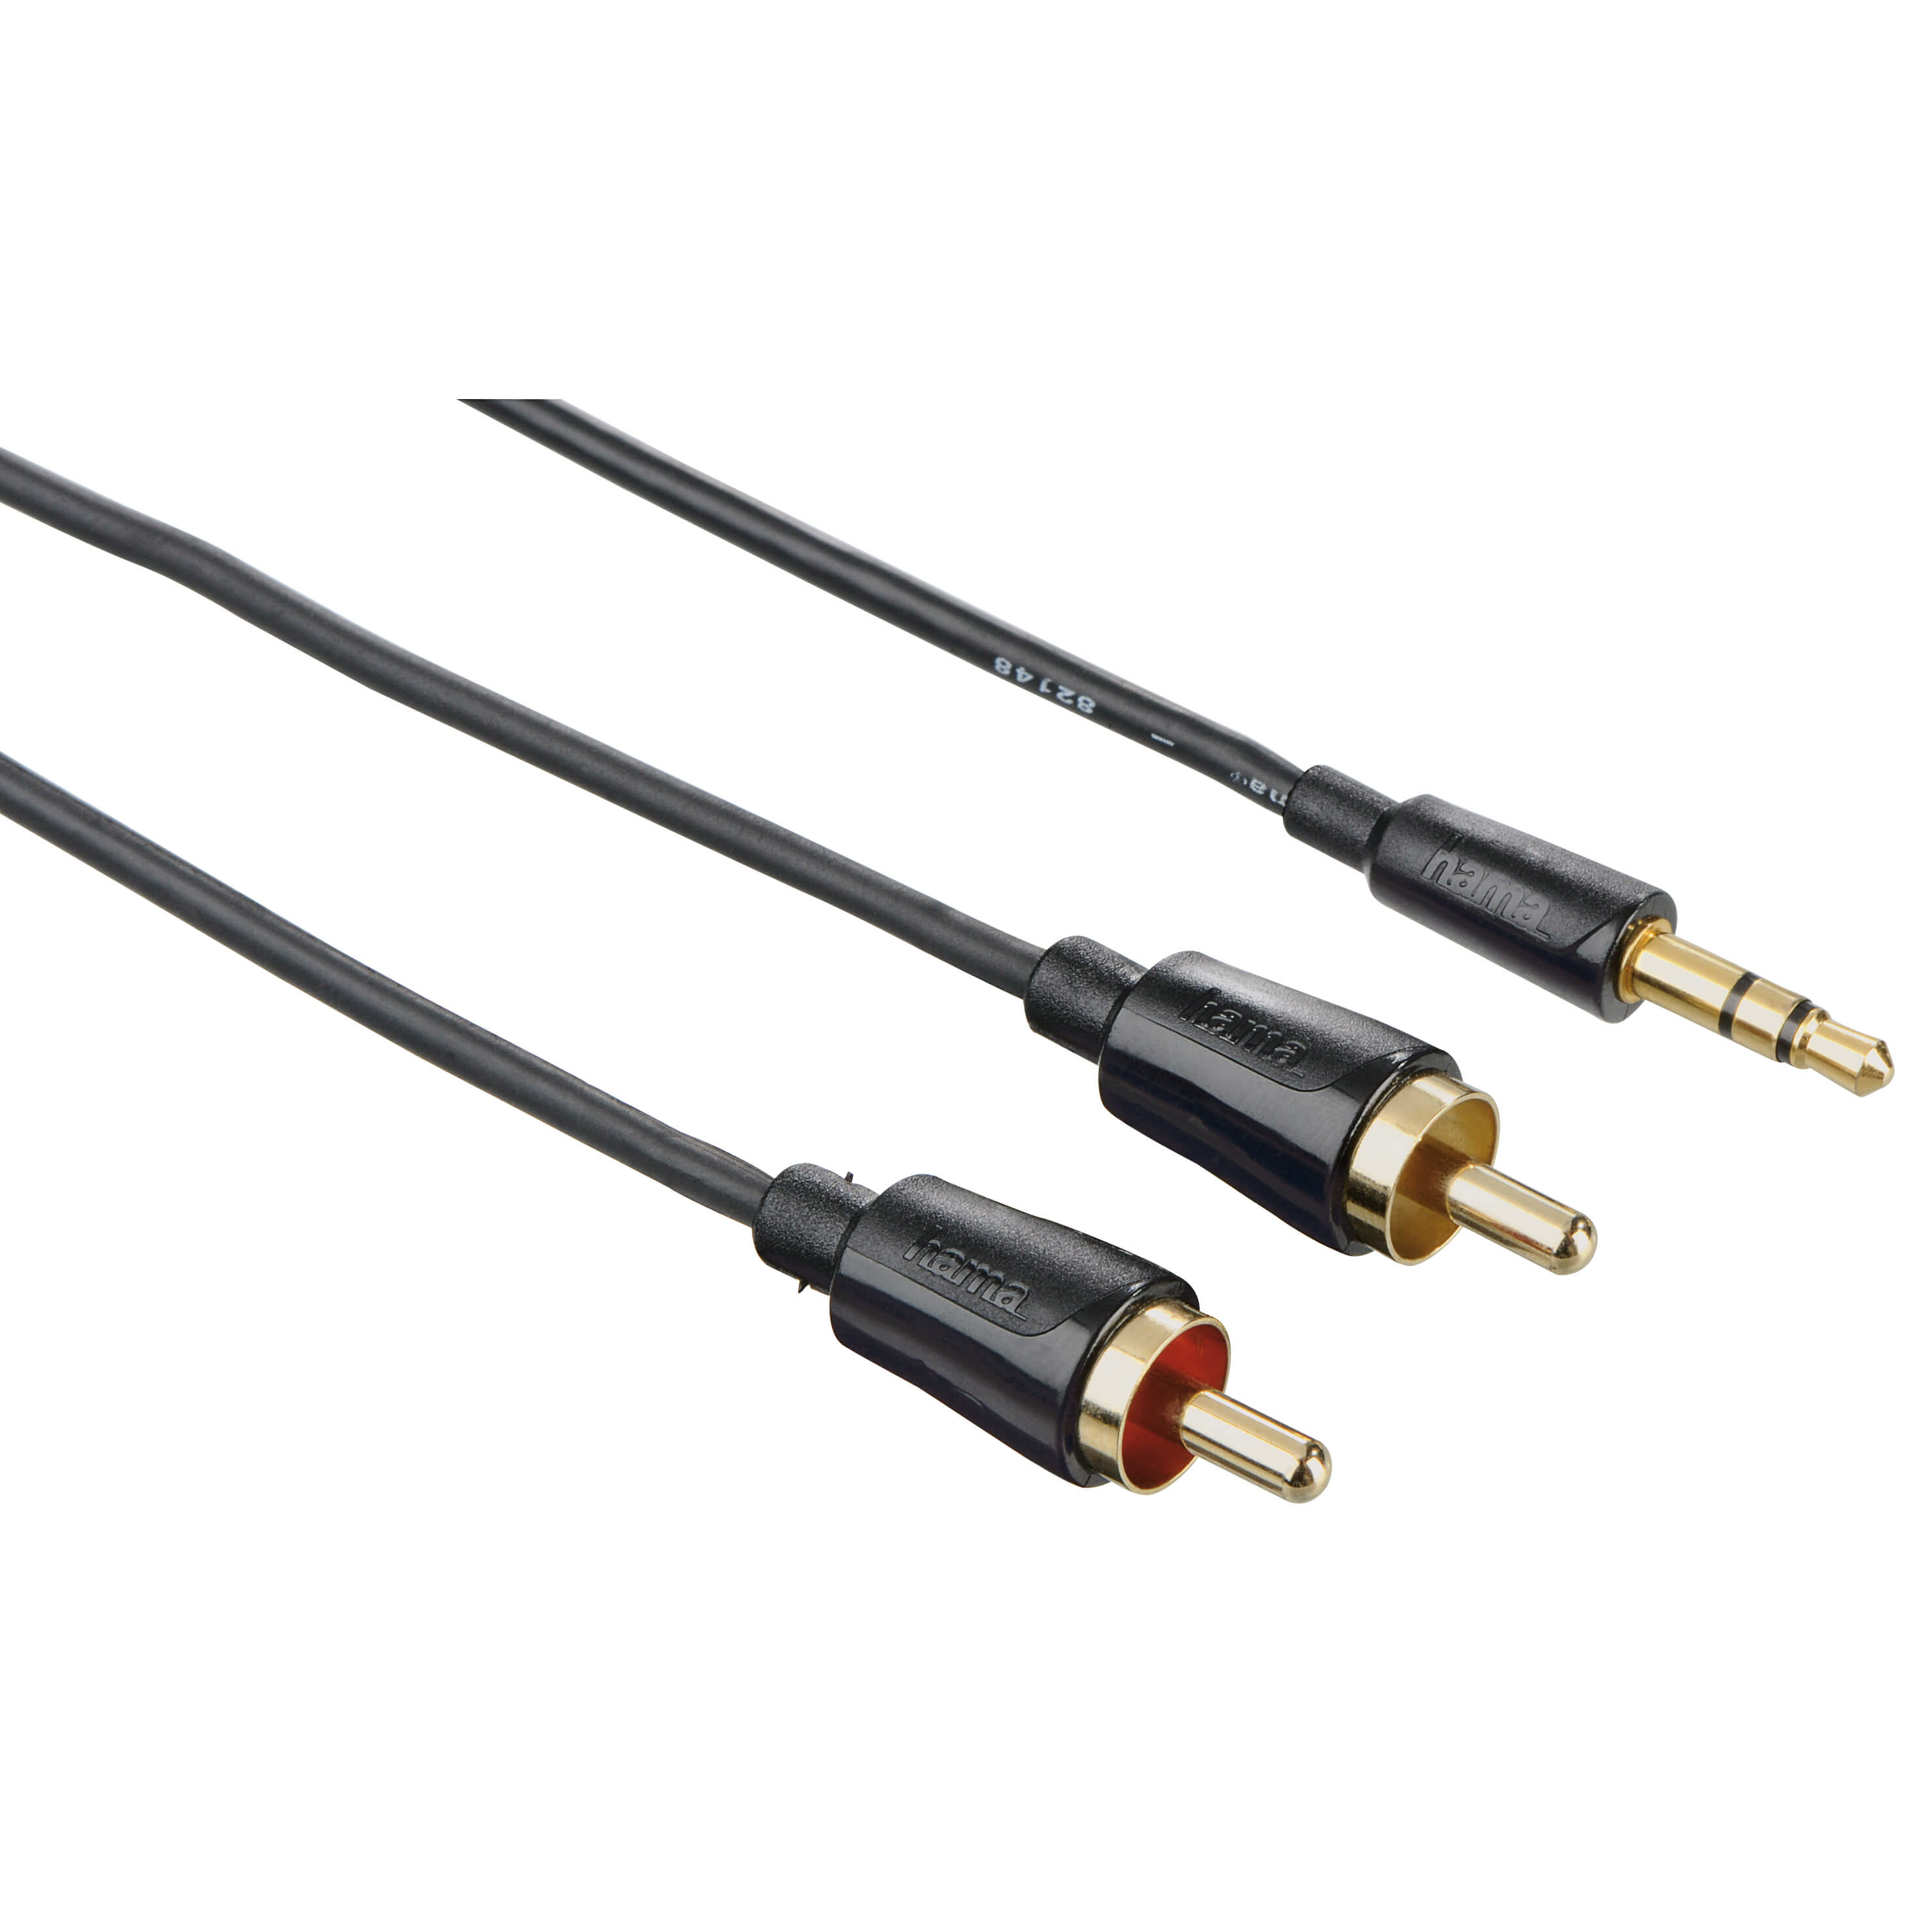 HAMA Flexi-Slim Audio Cable, 3.5 m m stereo jack plug - 2 RCA plu